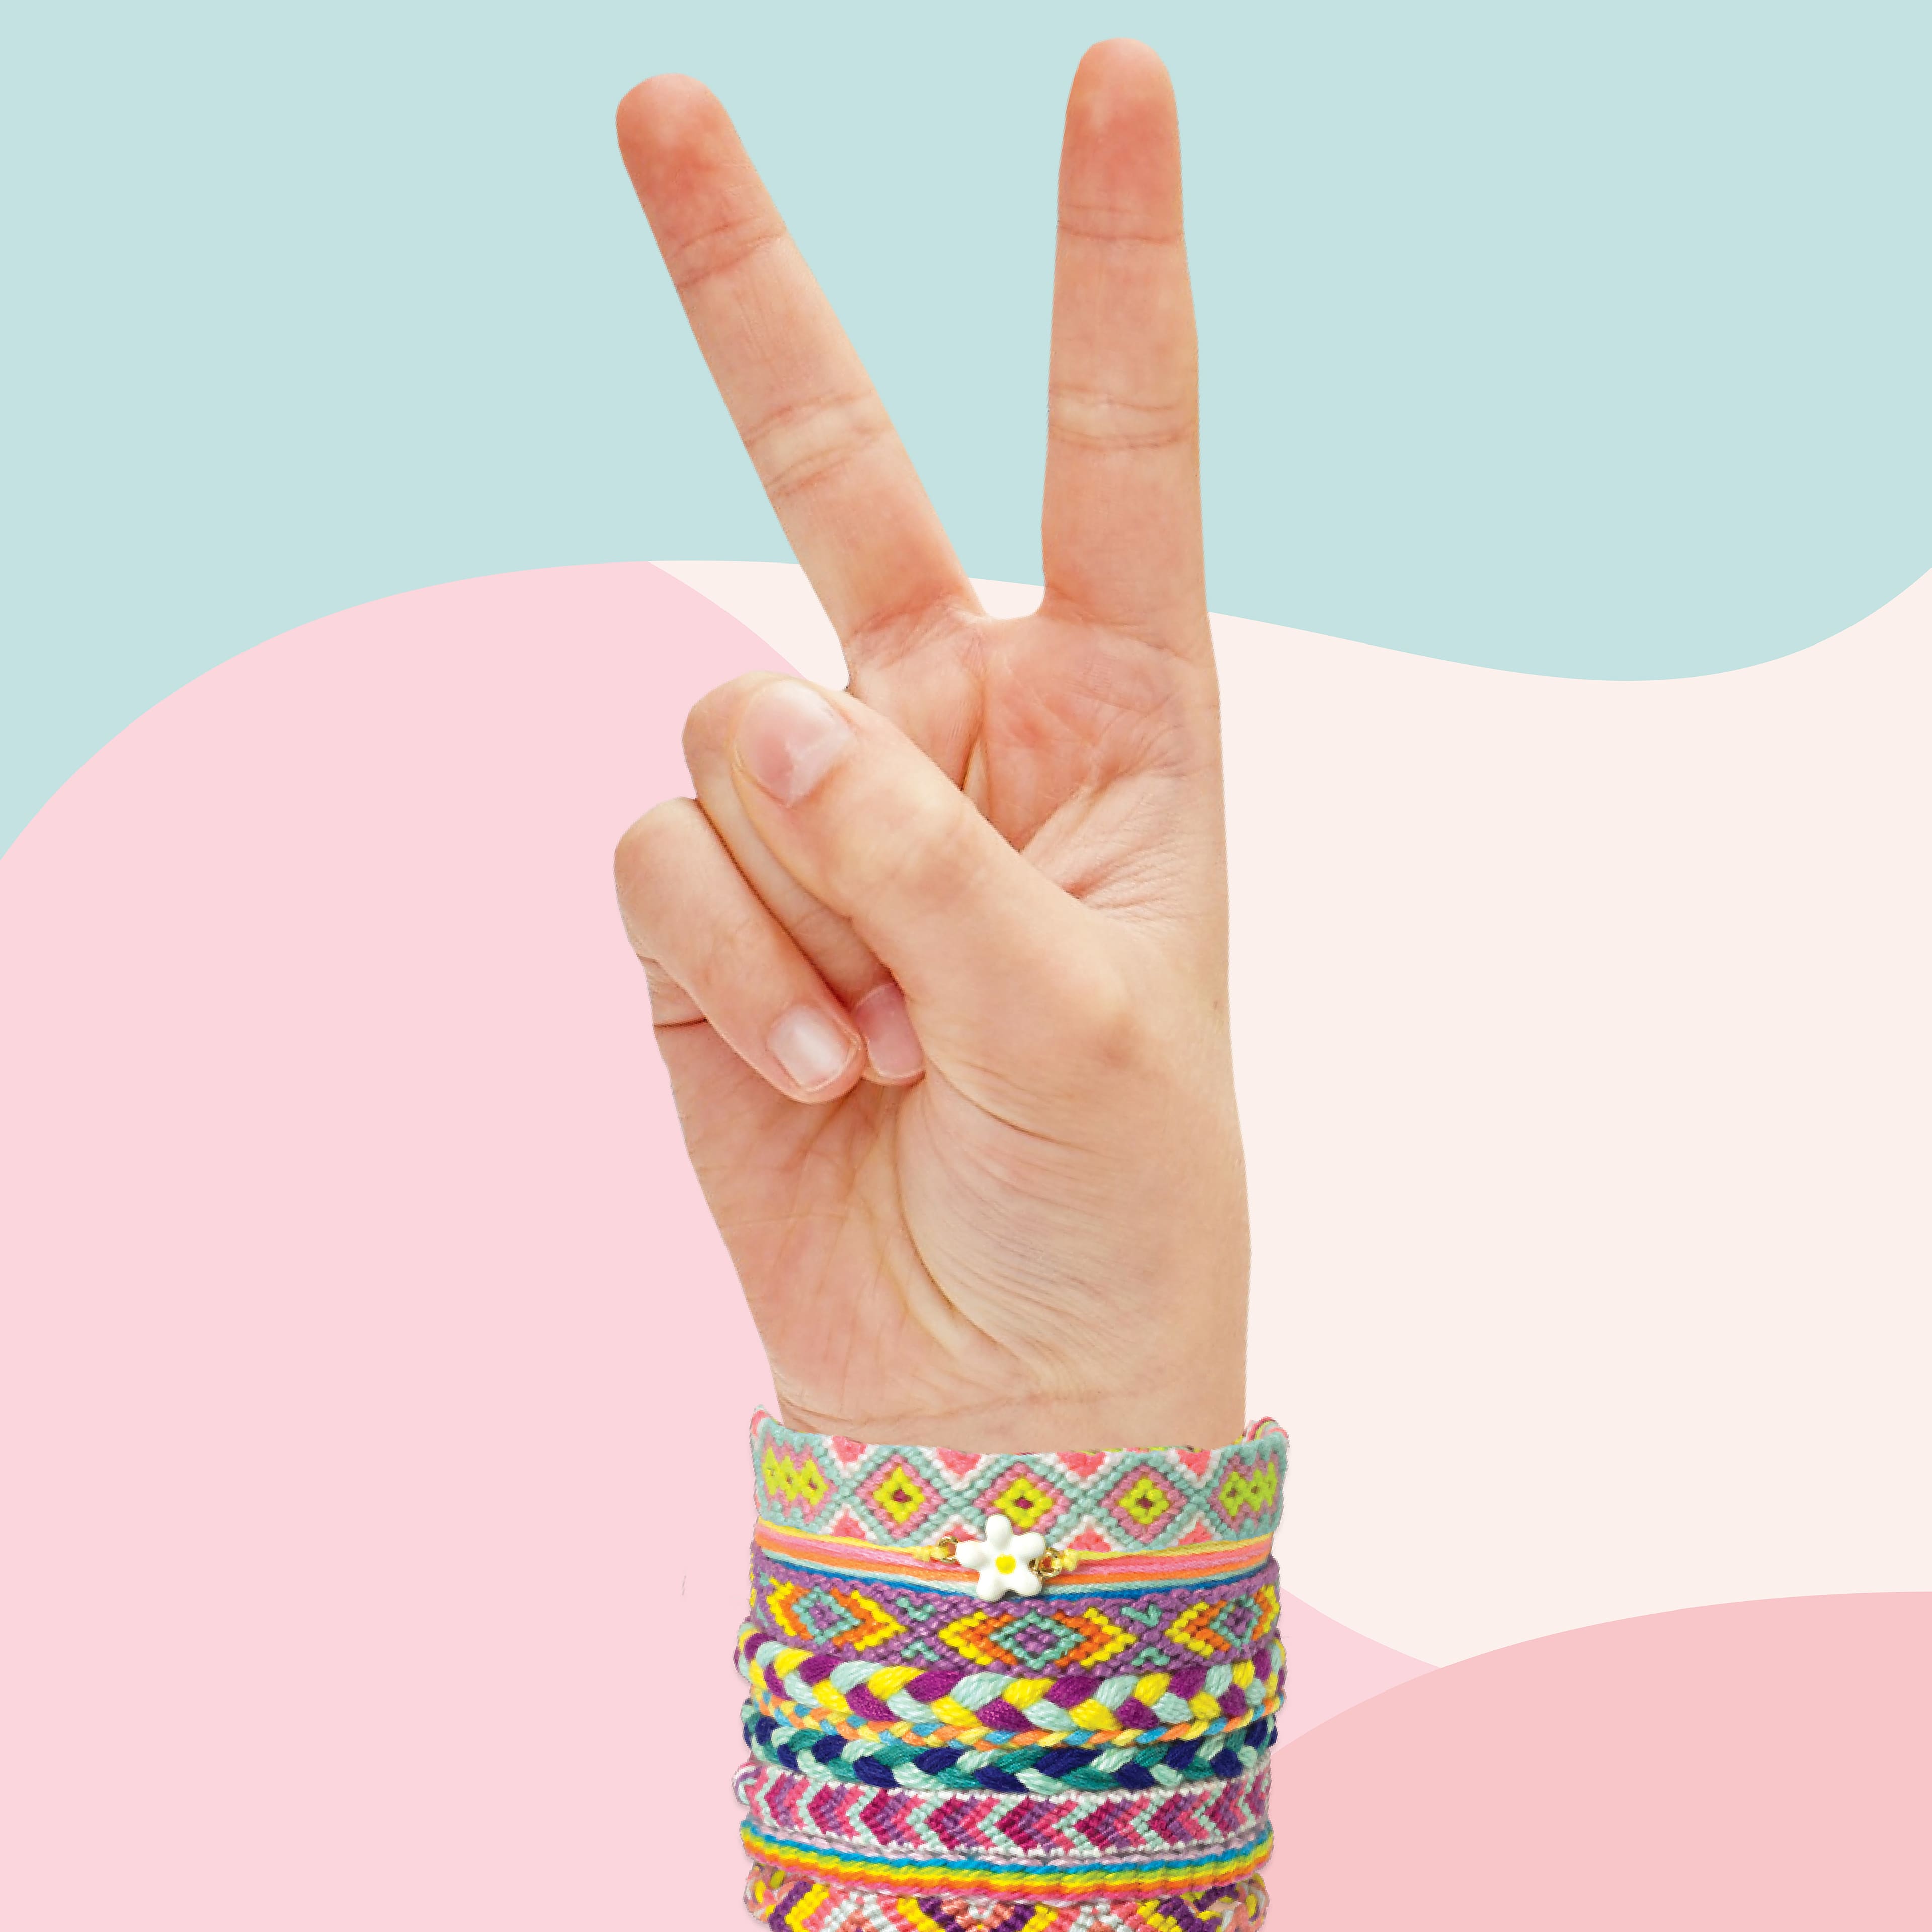 Rainbow Floss Friendship Bracelet Kit by Creatology™